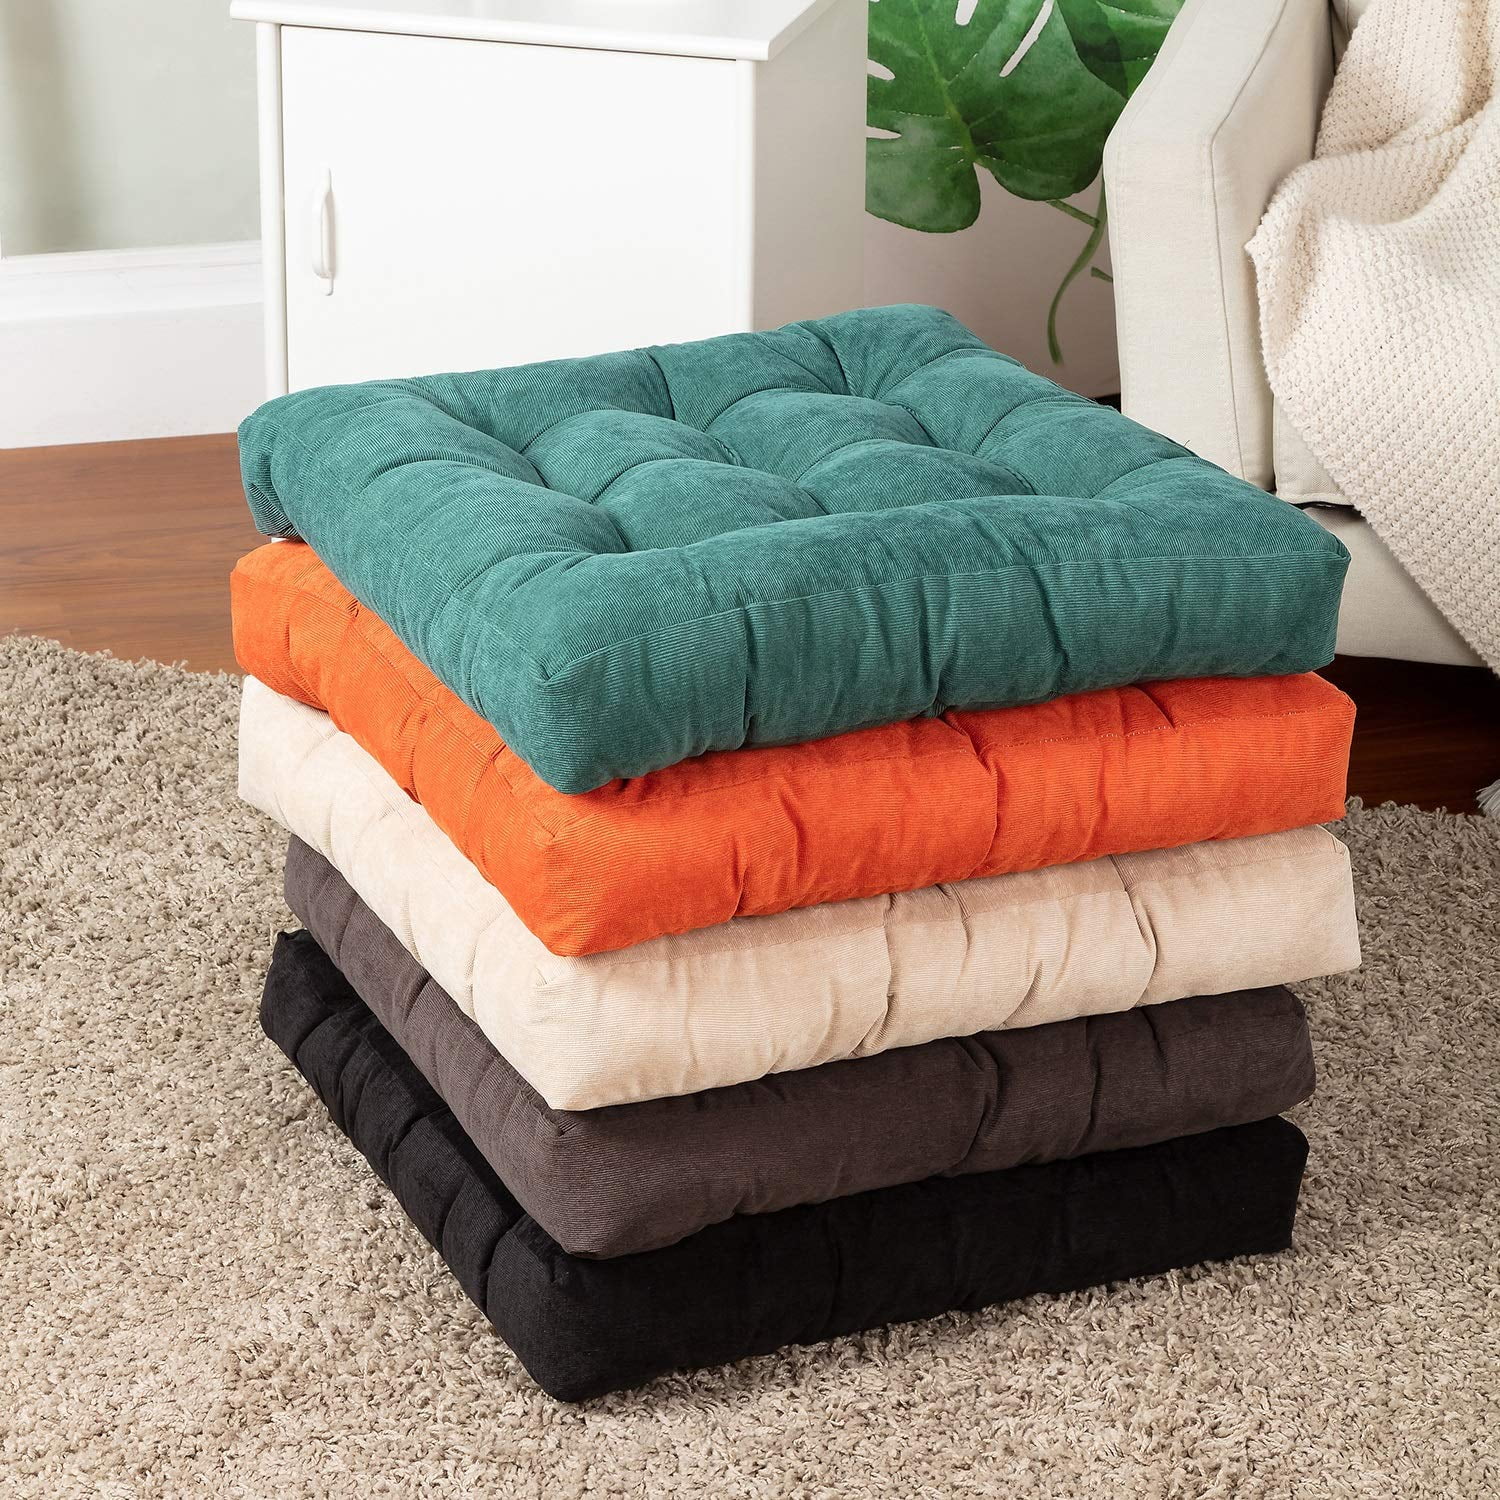 Floor Cushion Cotton 110x80x15 13 kg KG 3 Assorted. - Dekodonia